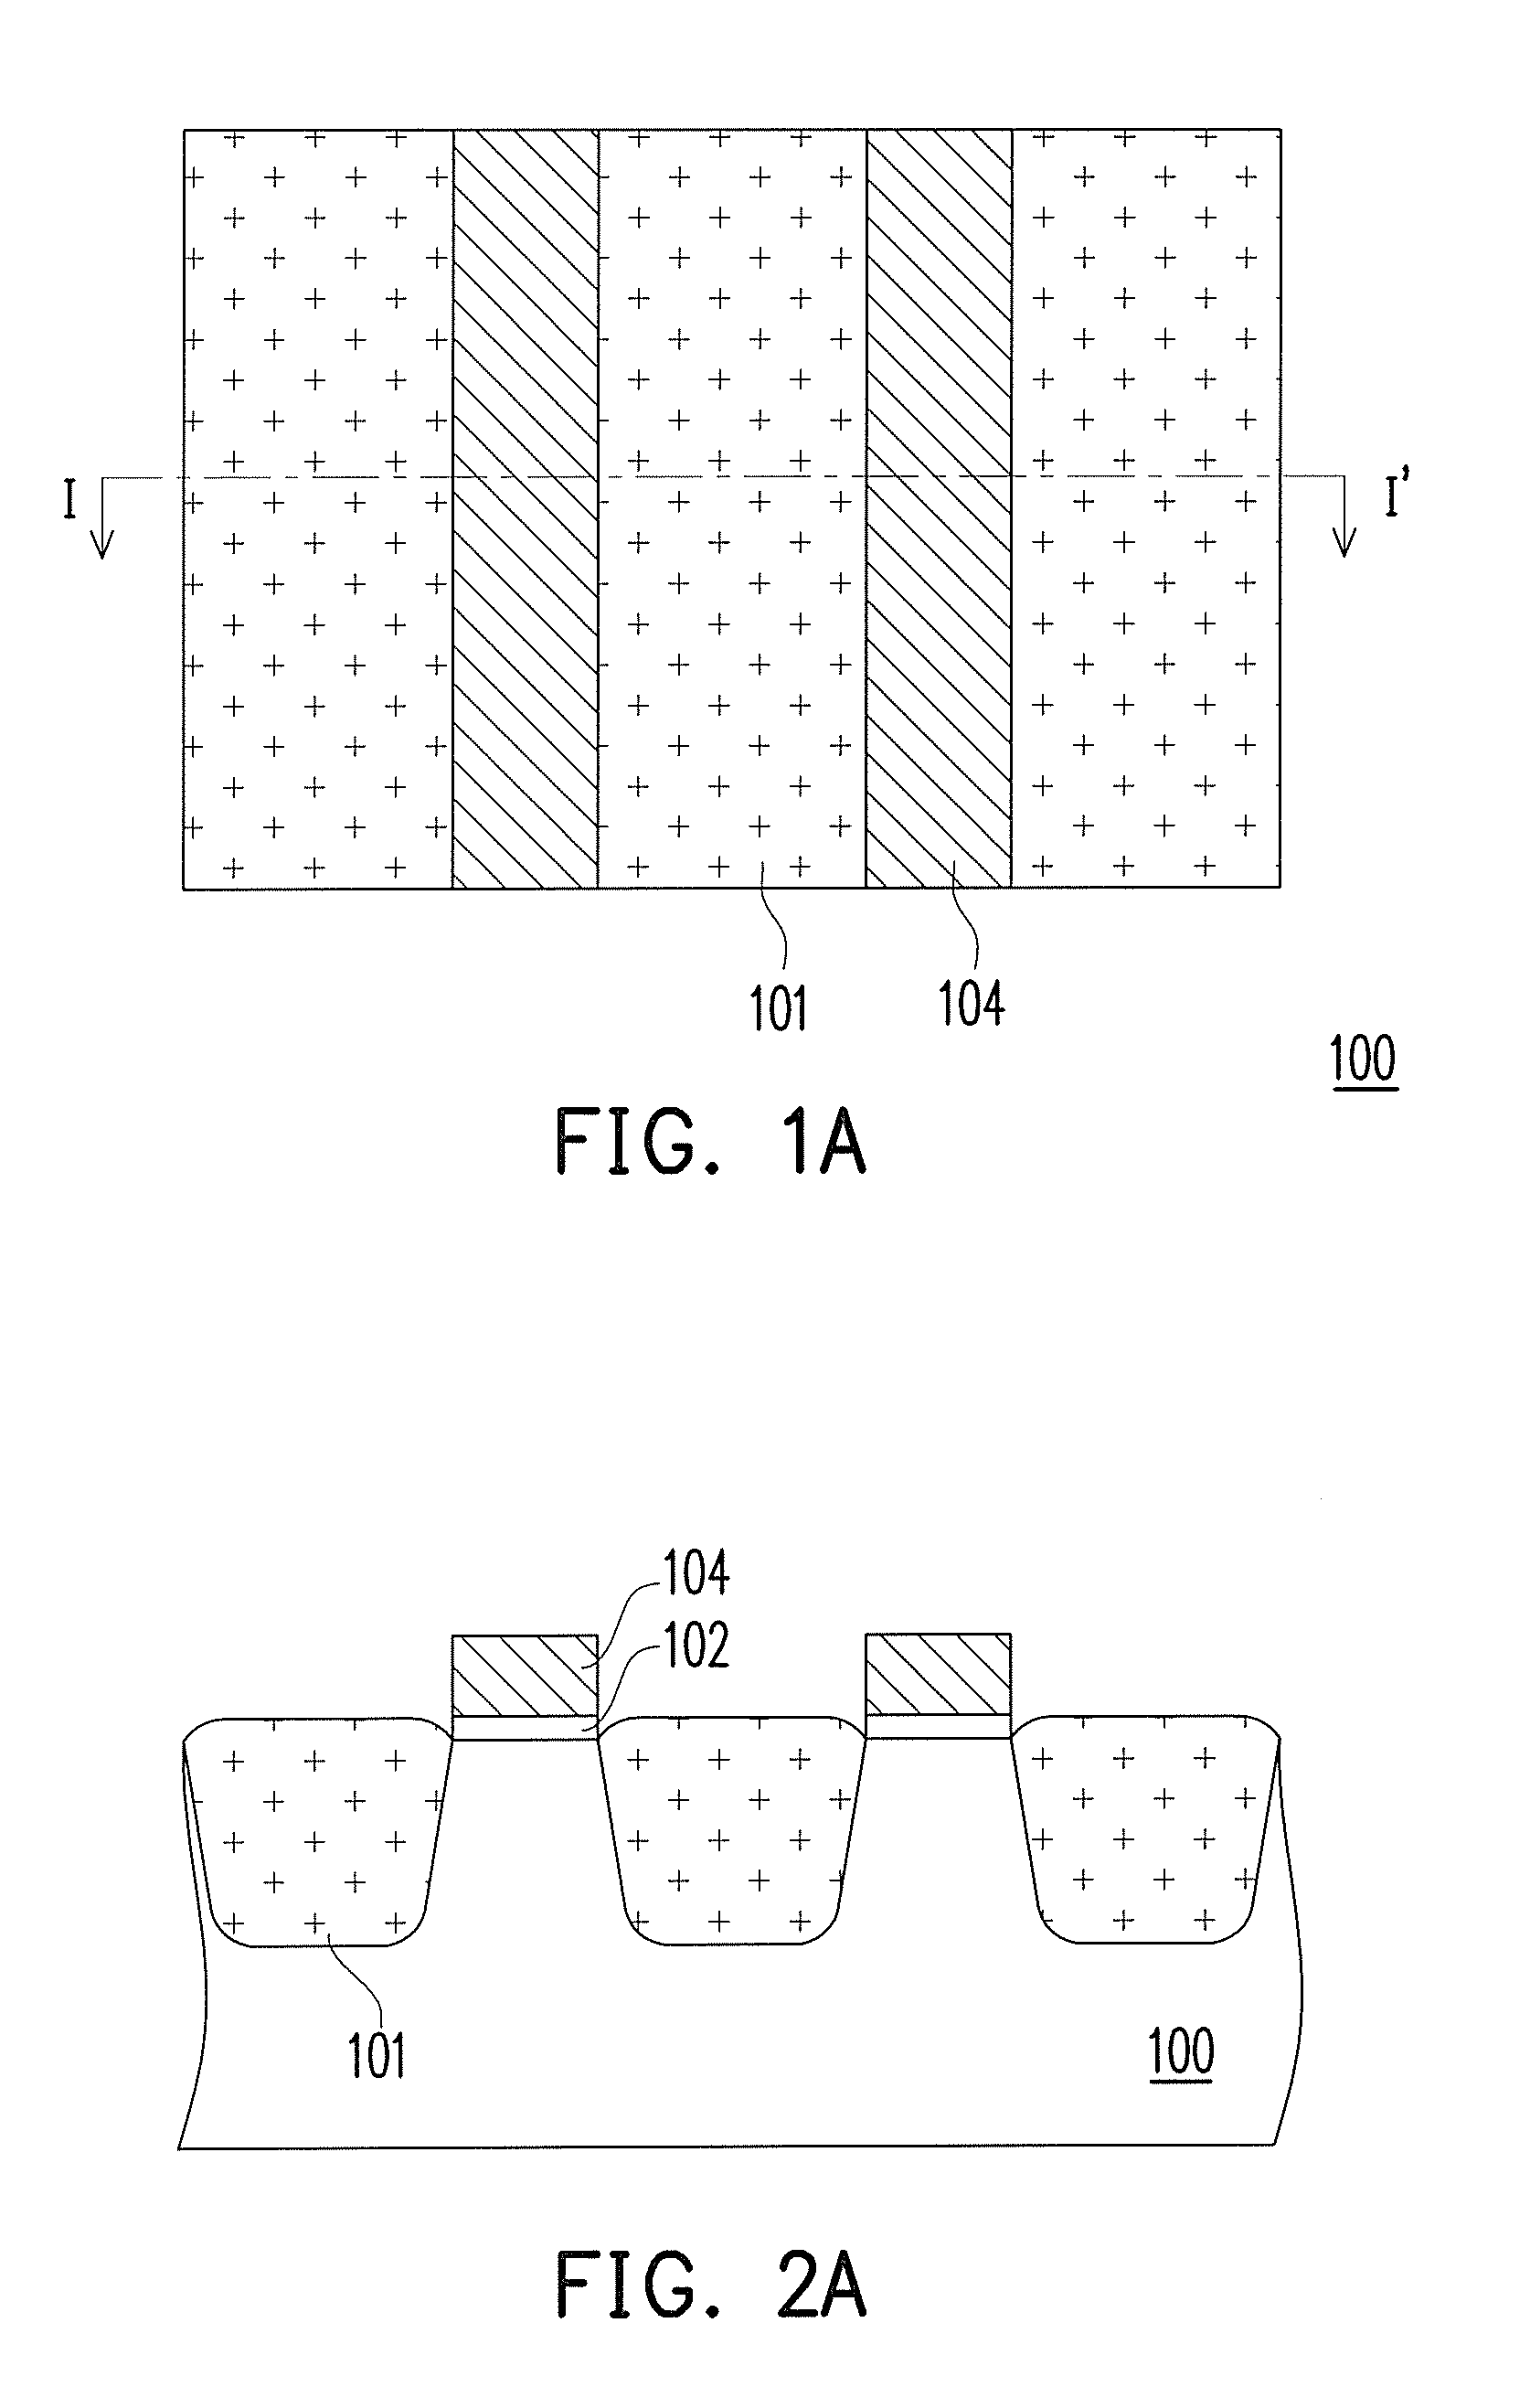 Method of fabricating device